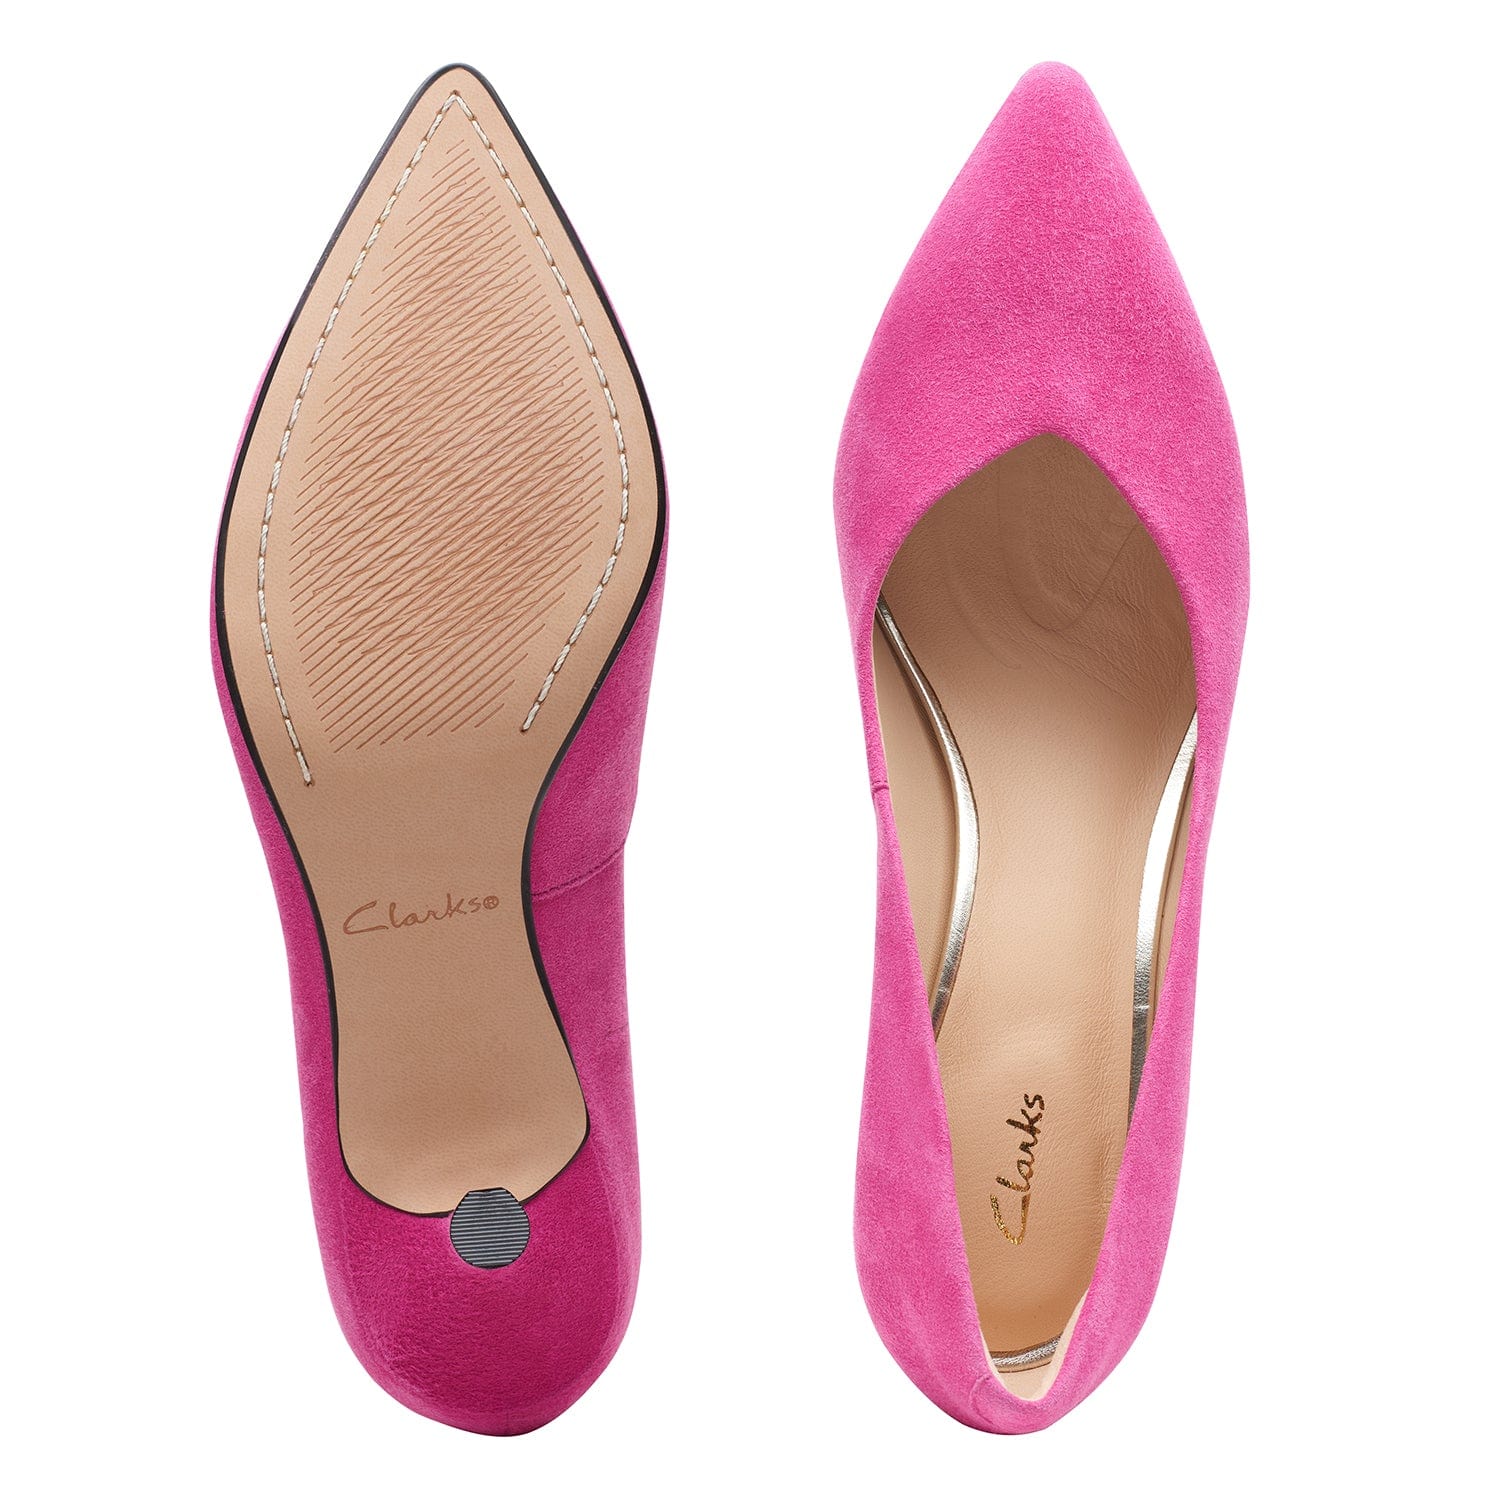 Clarks Violet55 Court Shoes - Berry Suede - 261615324 - D Width (Standard Fit)